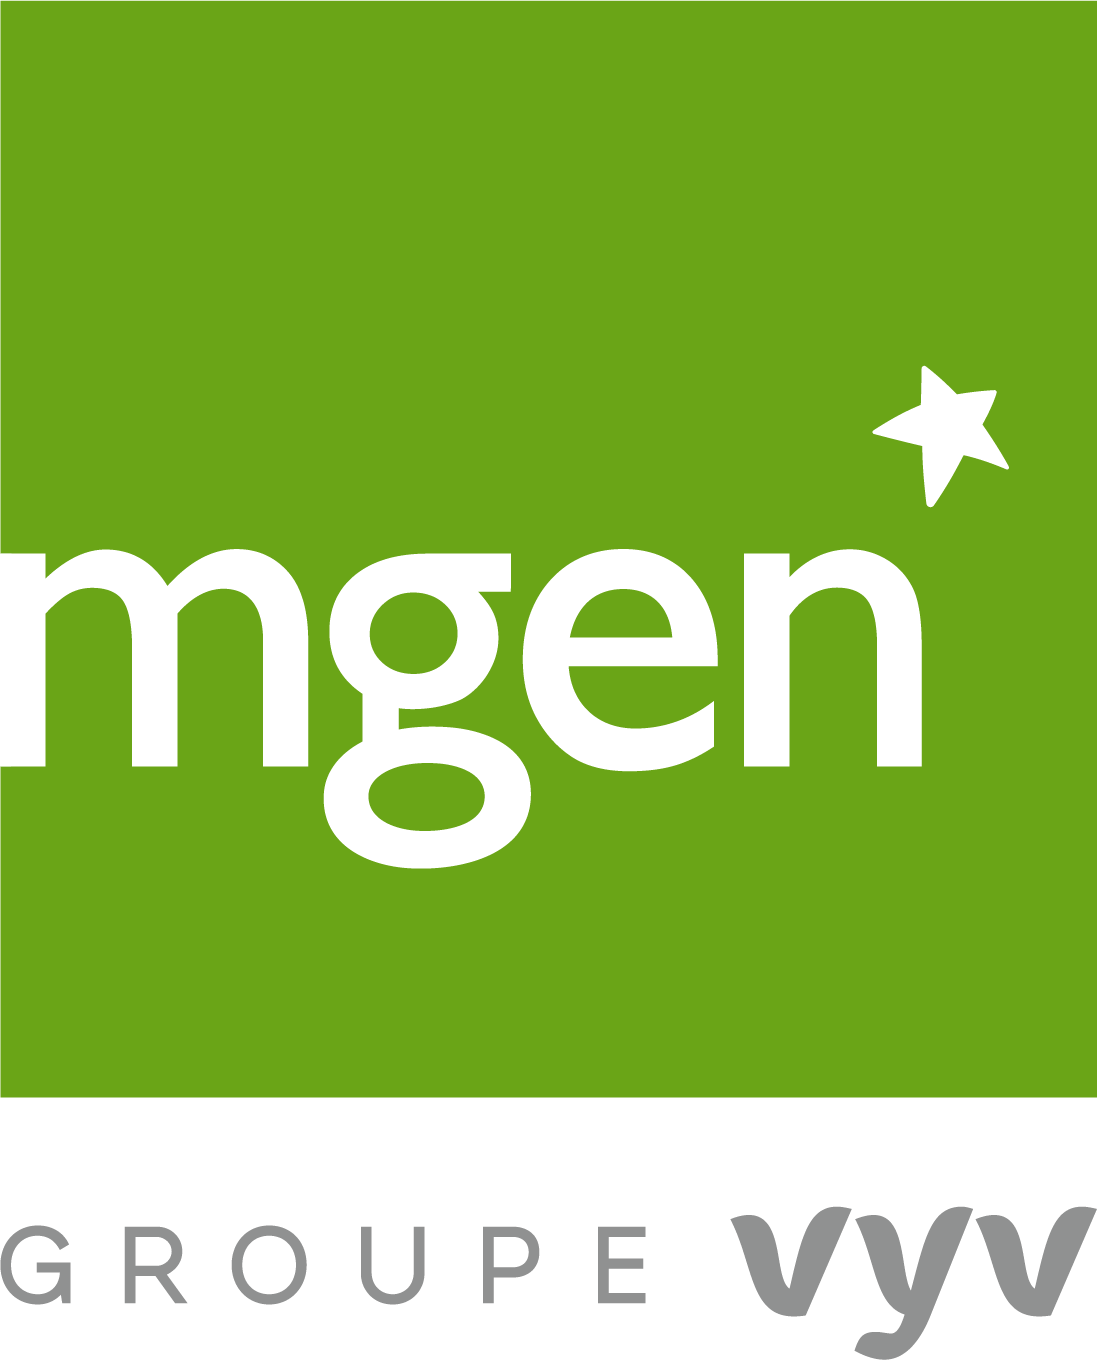 Logo de MGEN appartenant au groupe vyv